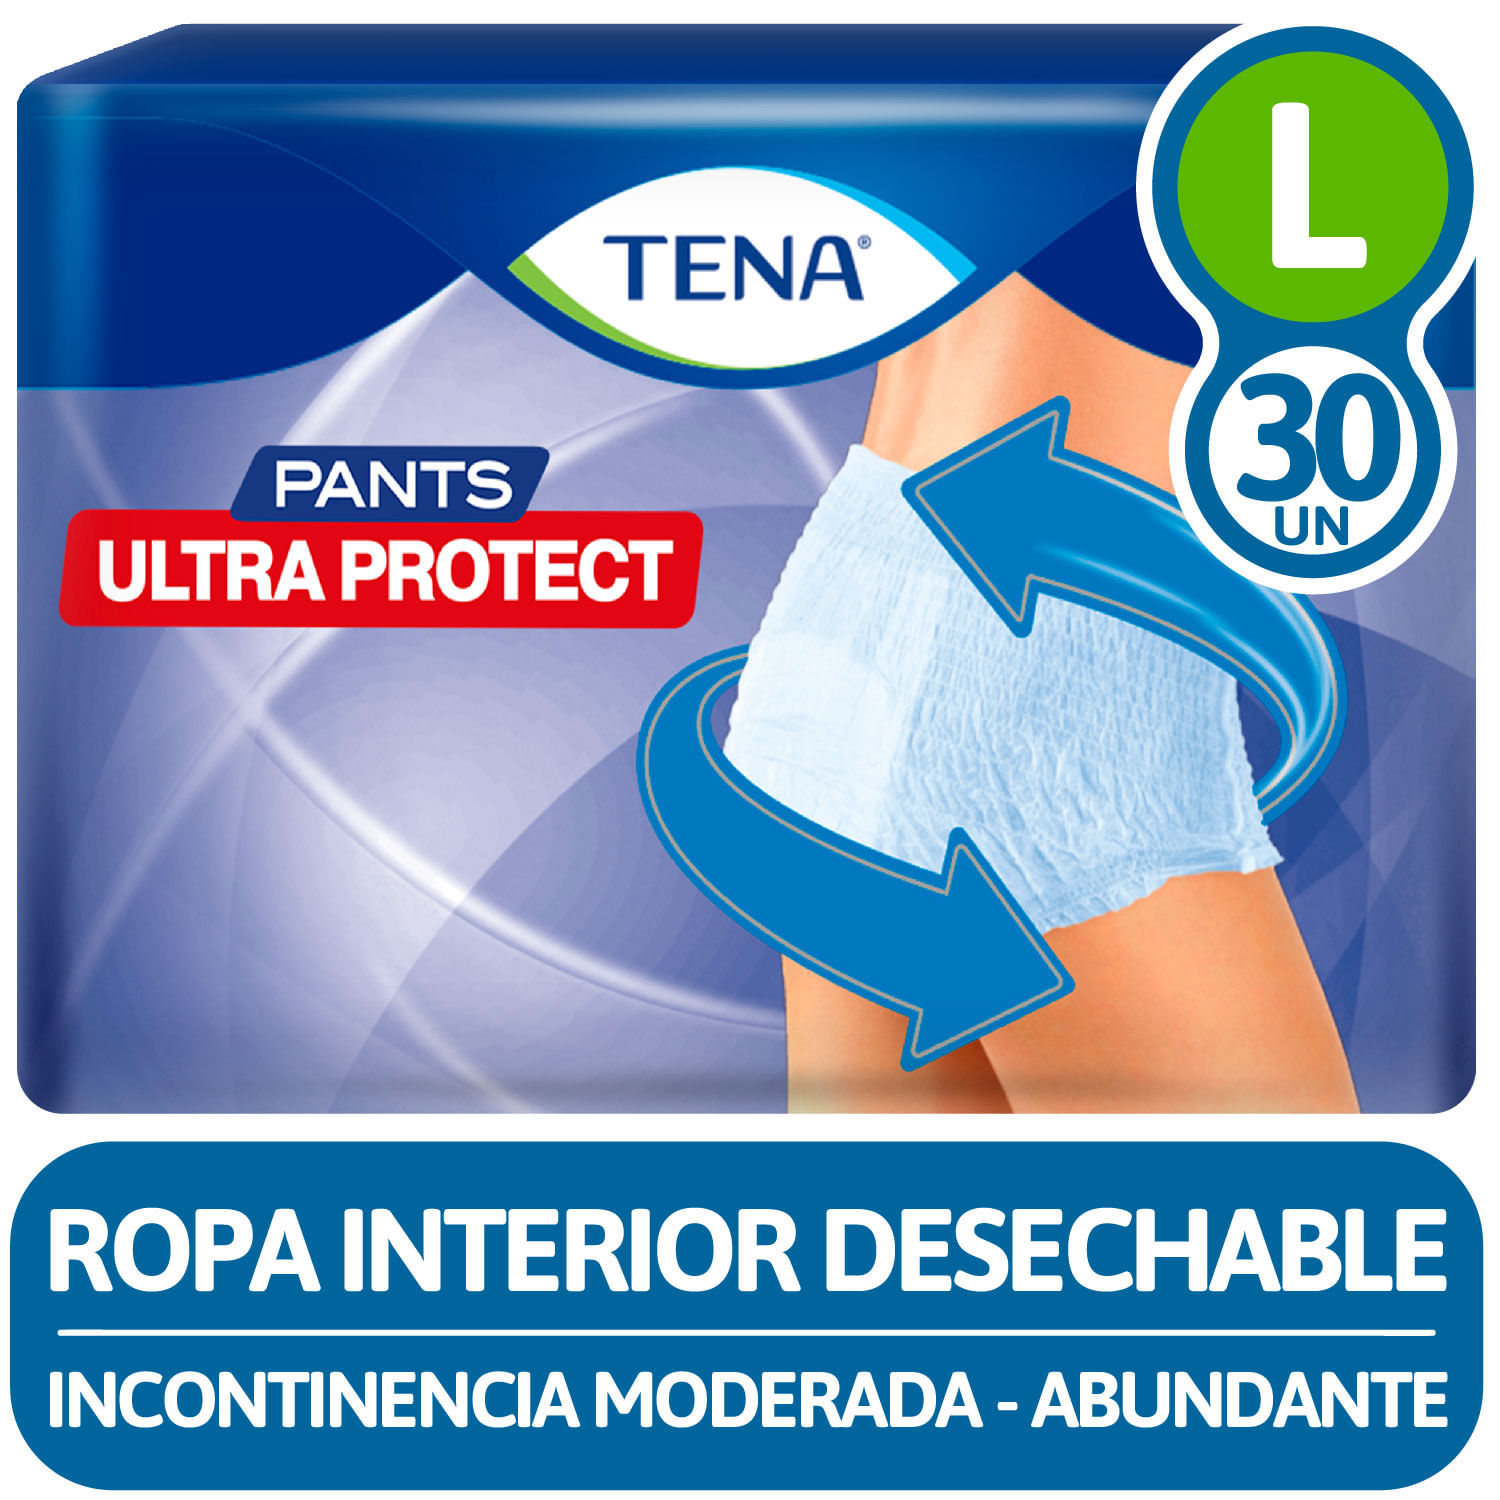 Ropa Interior Desechable para hombre Pants Men - TENA - Tena MX